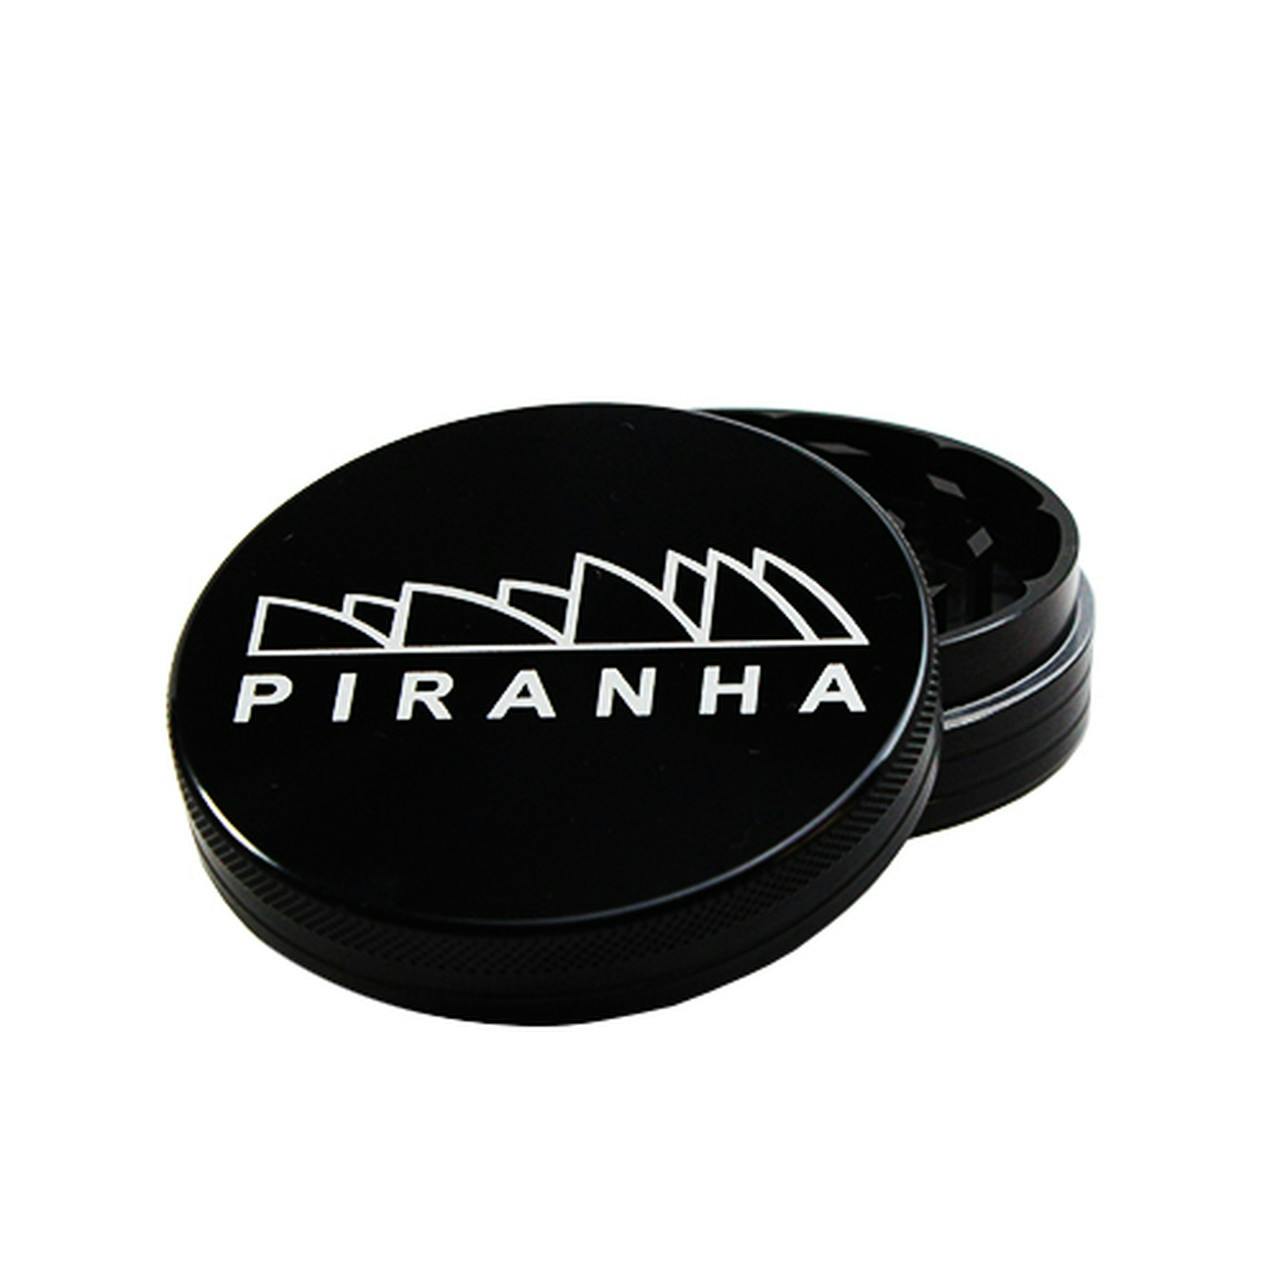 piranha 2 piece 3 inch black